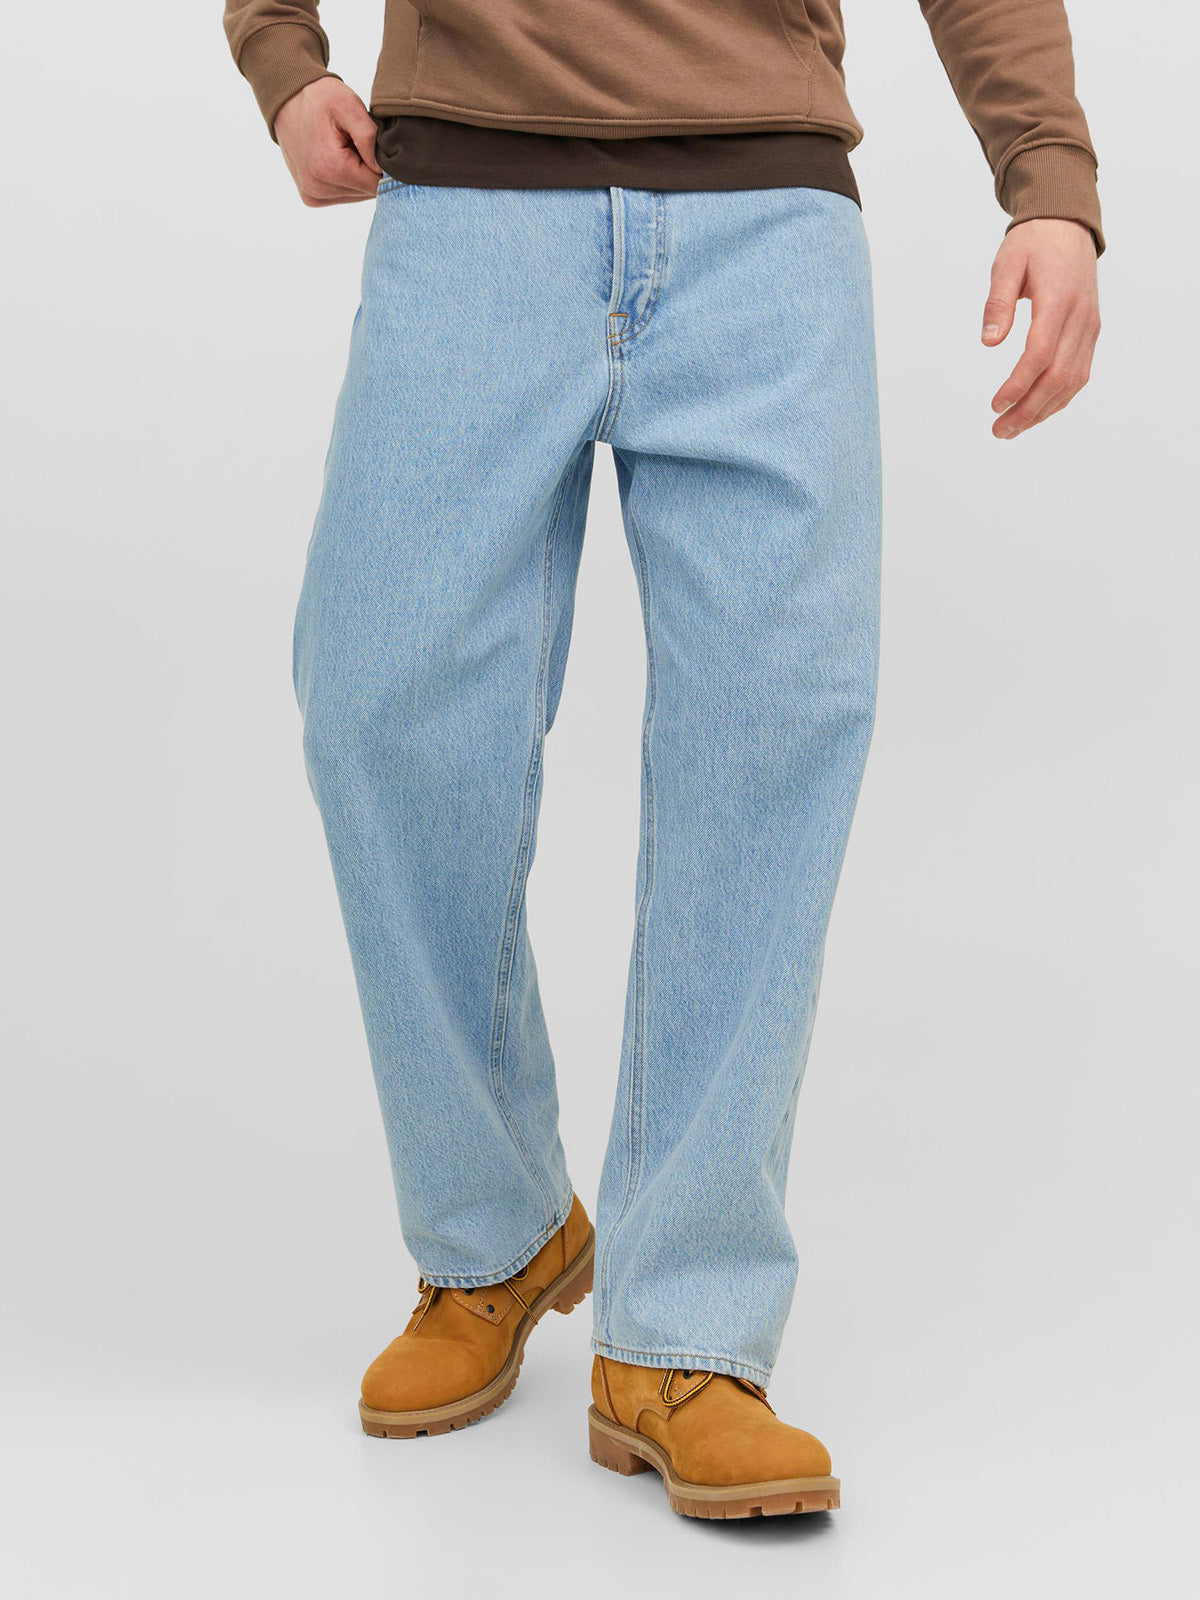 ג'ינס בגזרת אוברסייז / קצר במיוחד